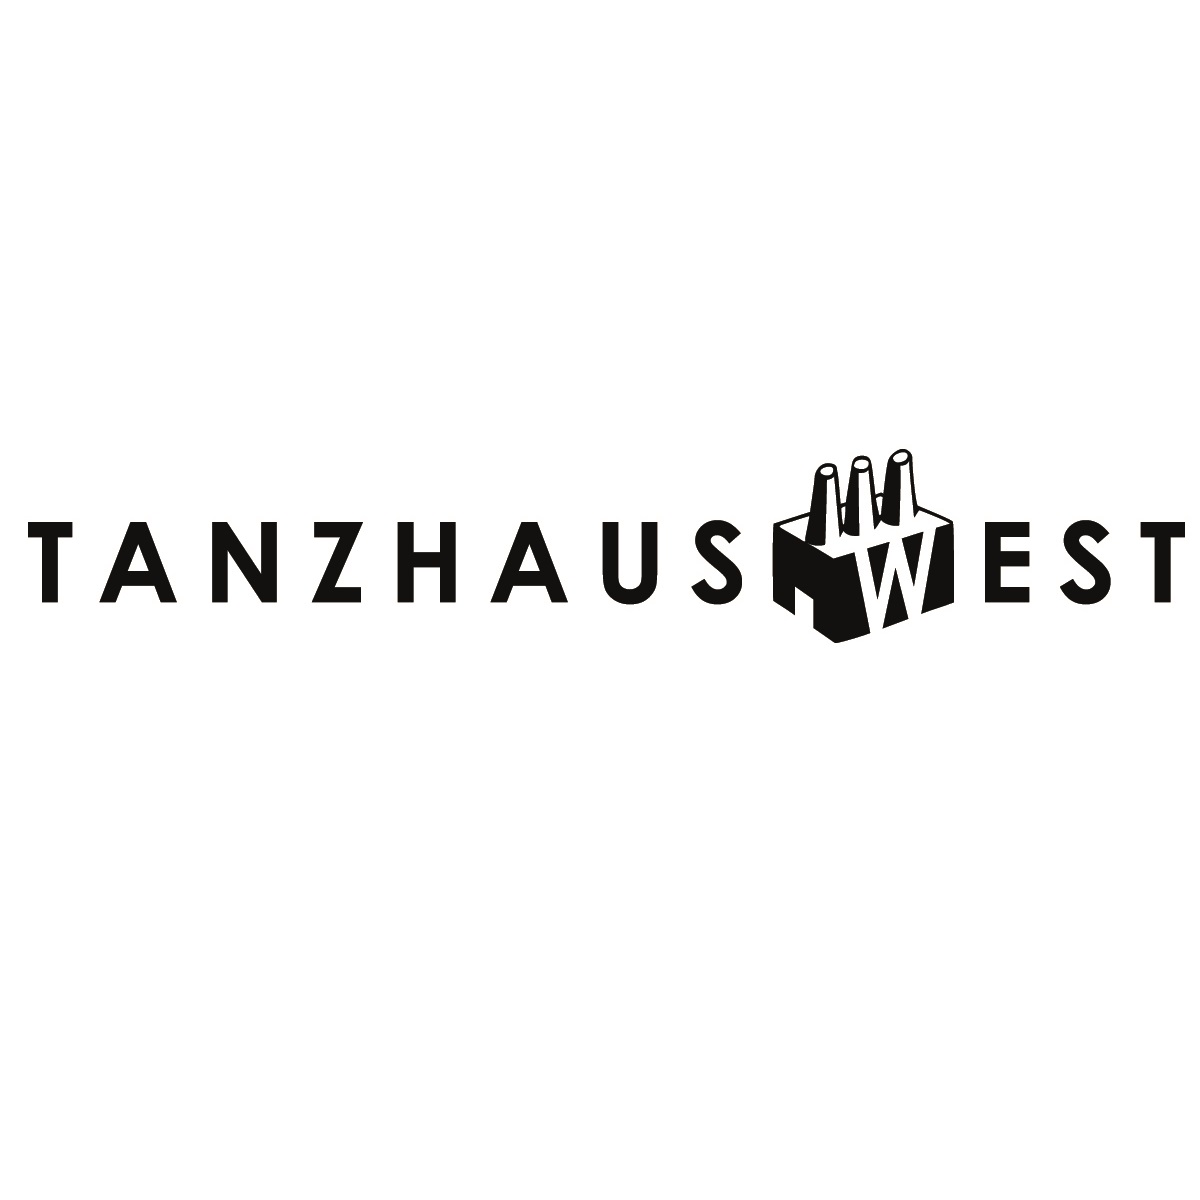 Tanzhaus West